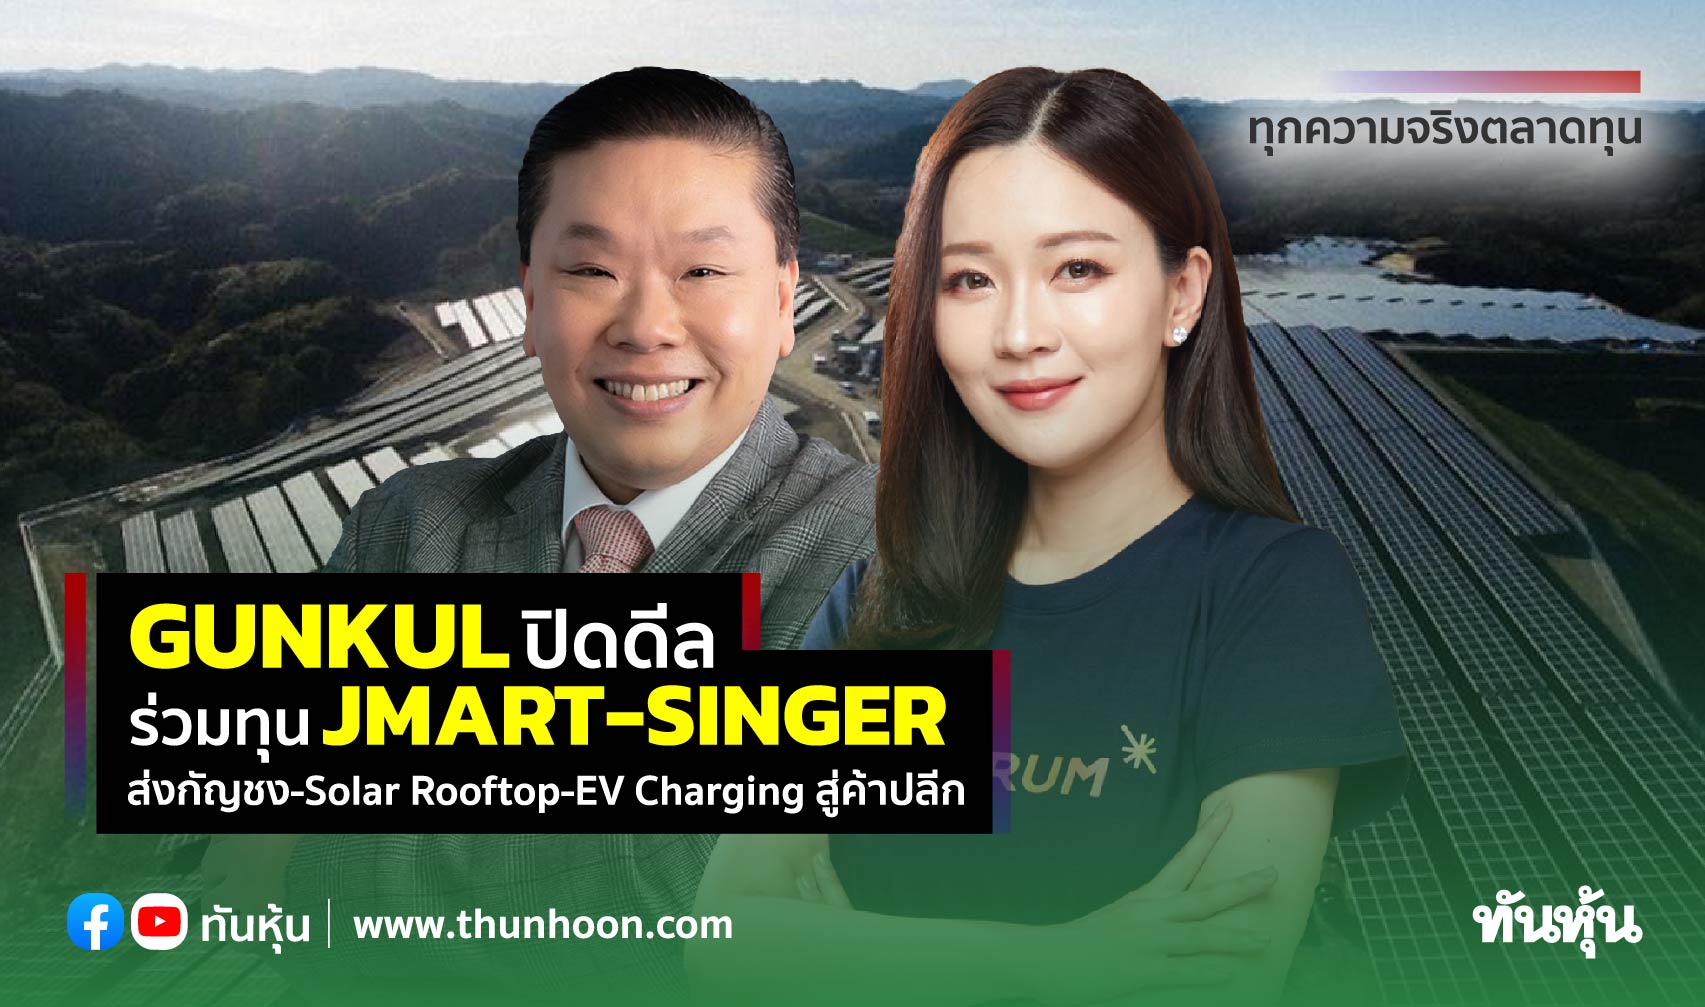 GUNKUL ปิดดีลร่วมทุน JMART-SINGER ส่งกัญชง-Solar Rooftop-EV Charging สู่ค้าปลีก